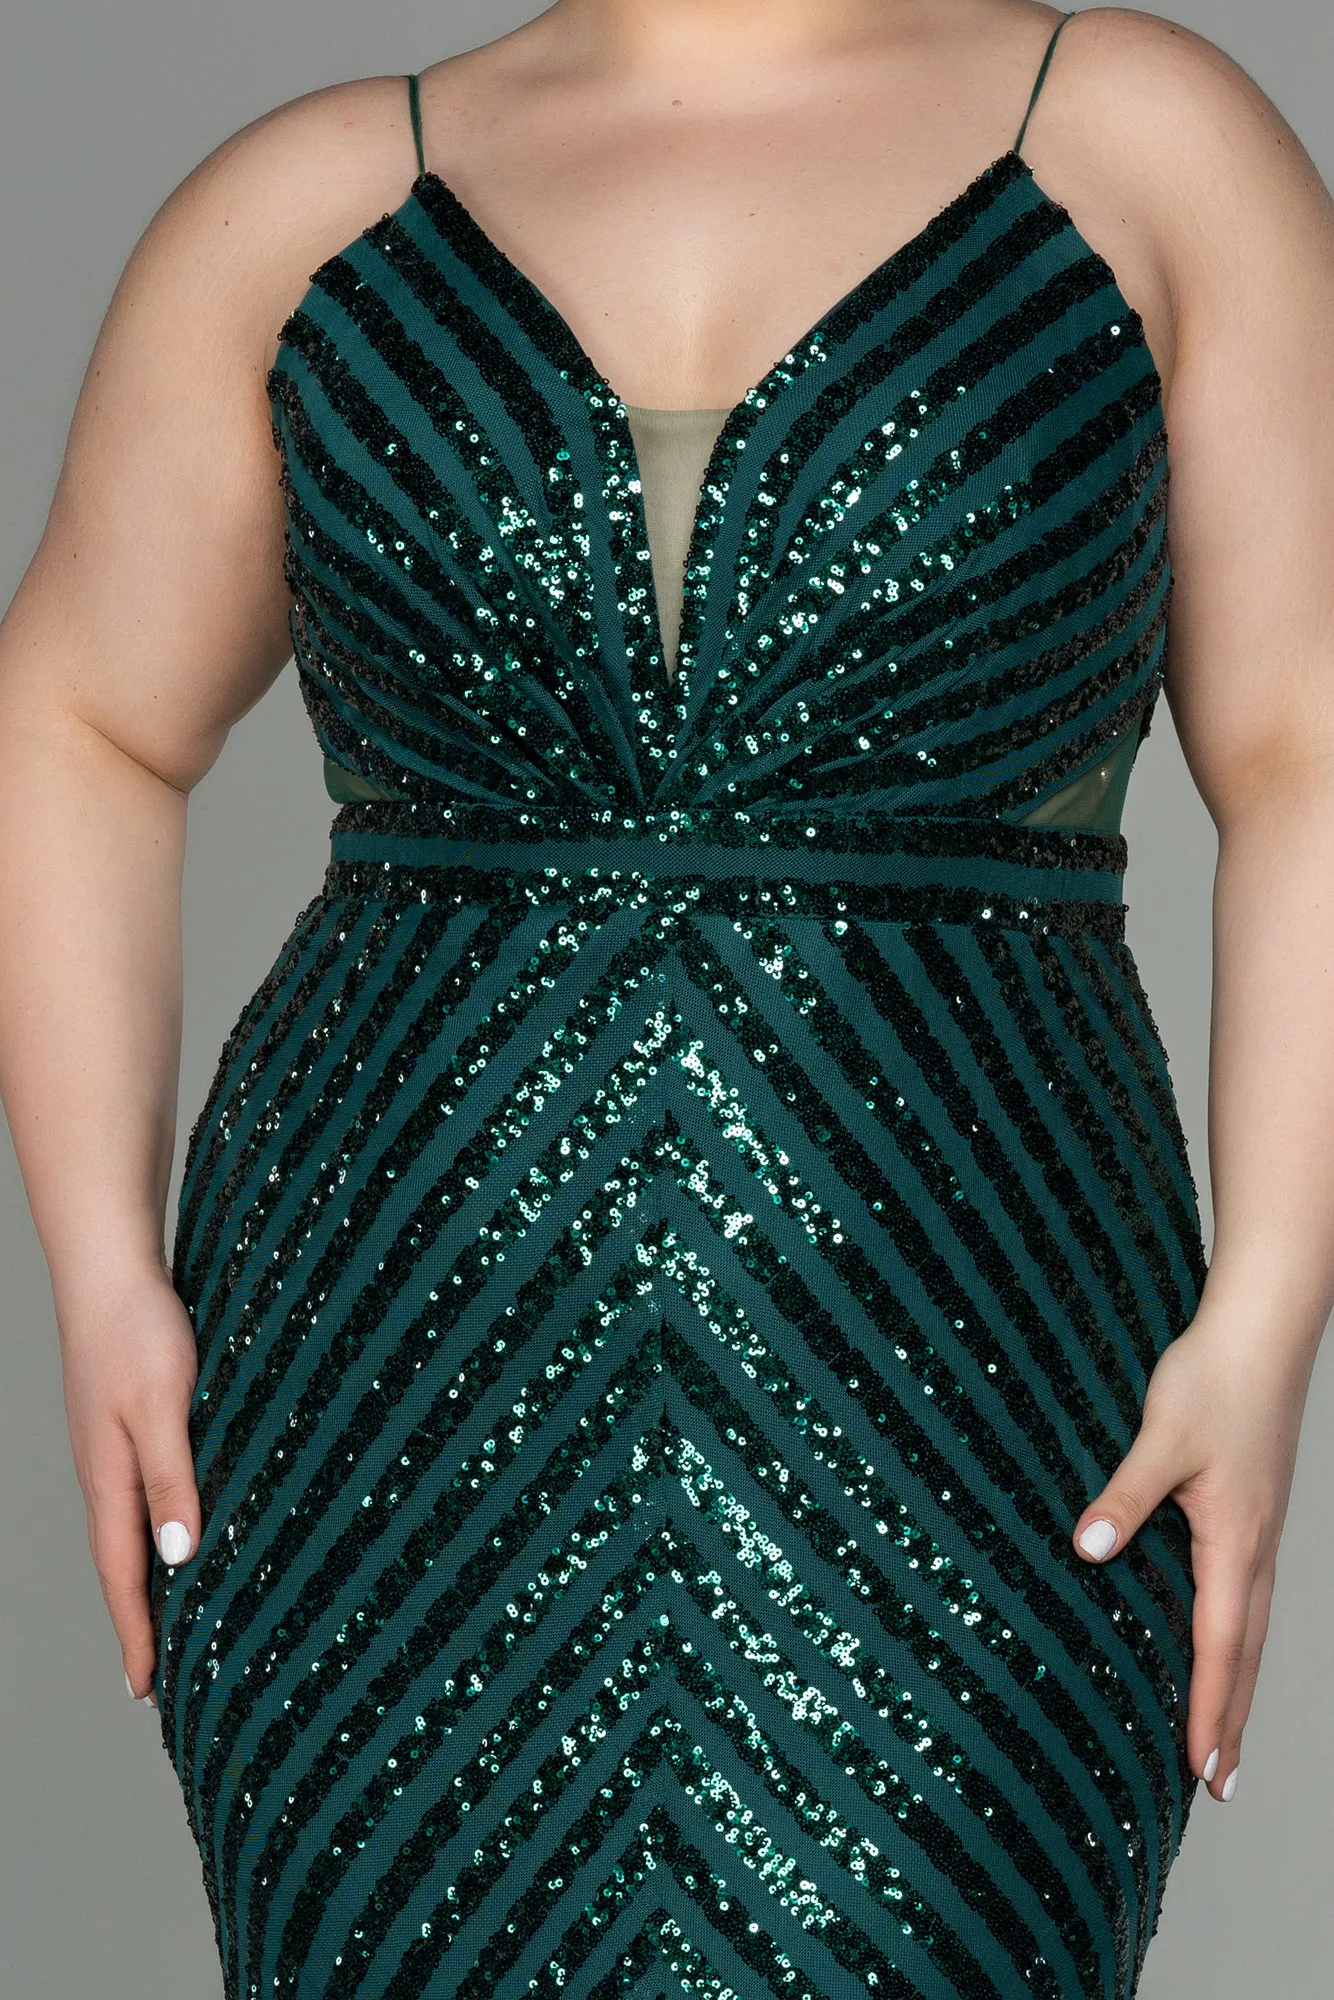 Emerald Green-Long Plus Size Evening Dress ABU1661